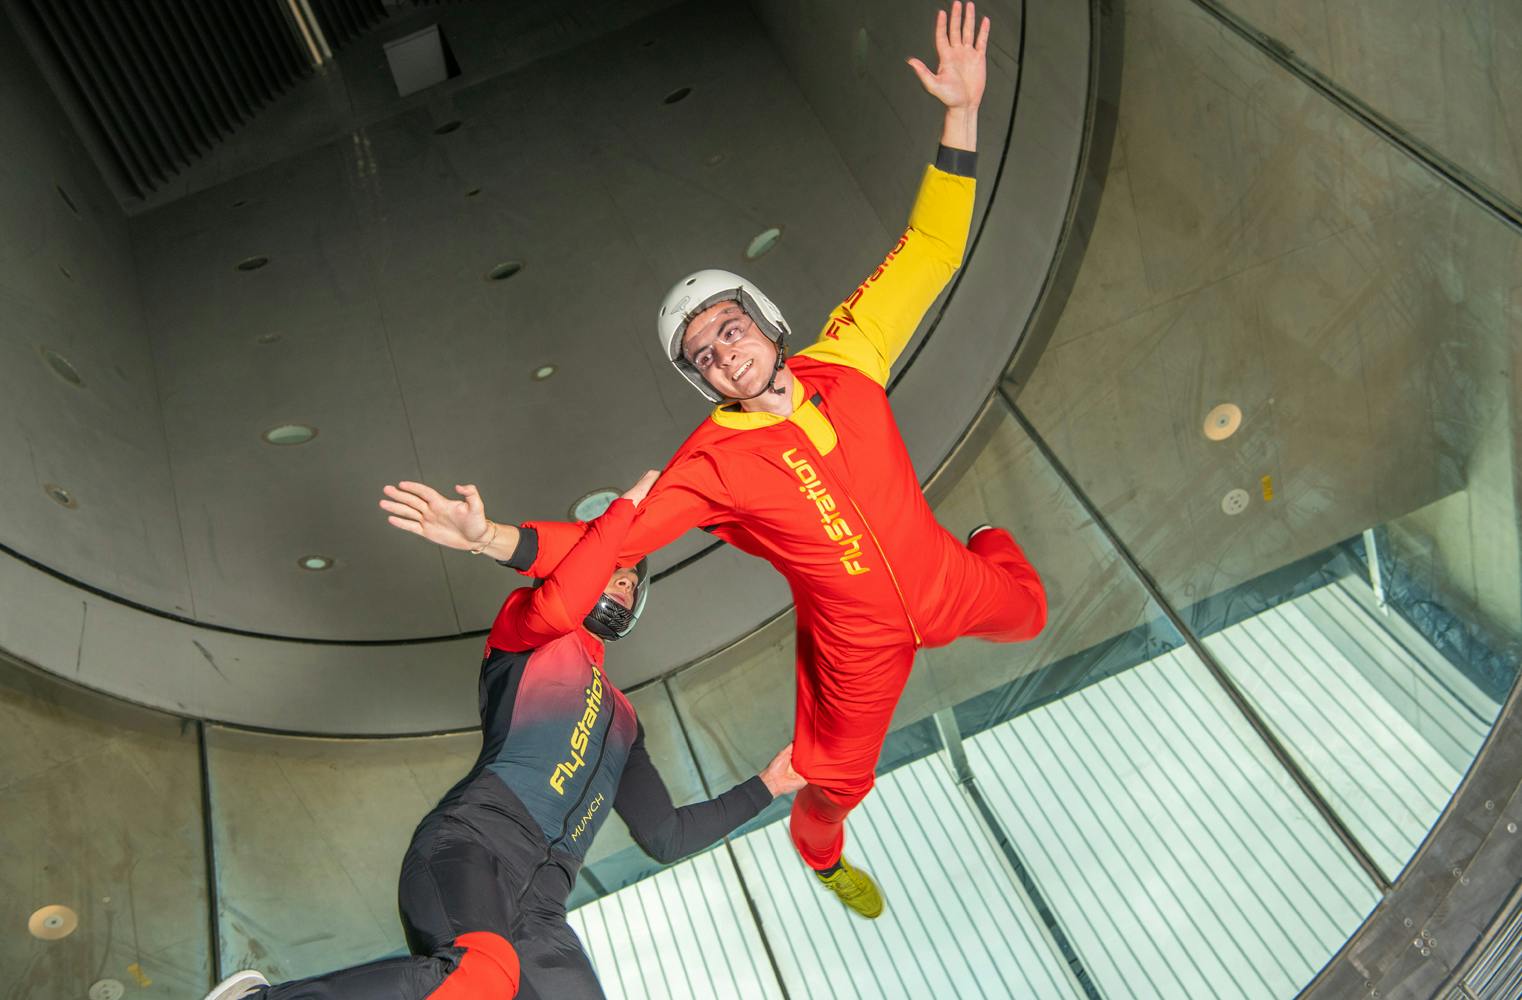 4 Min Indoor Skydiving | Bodyflying im Windtunnel